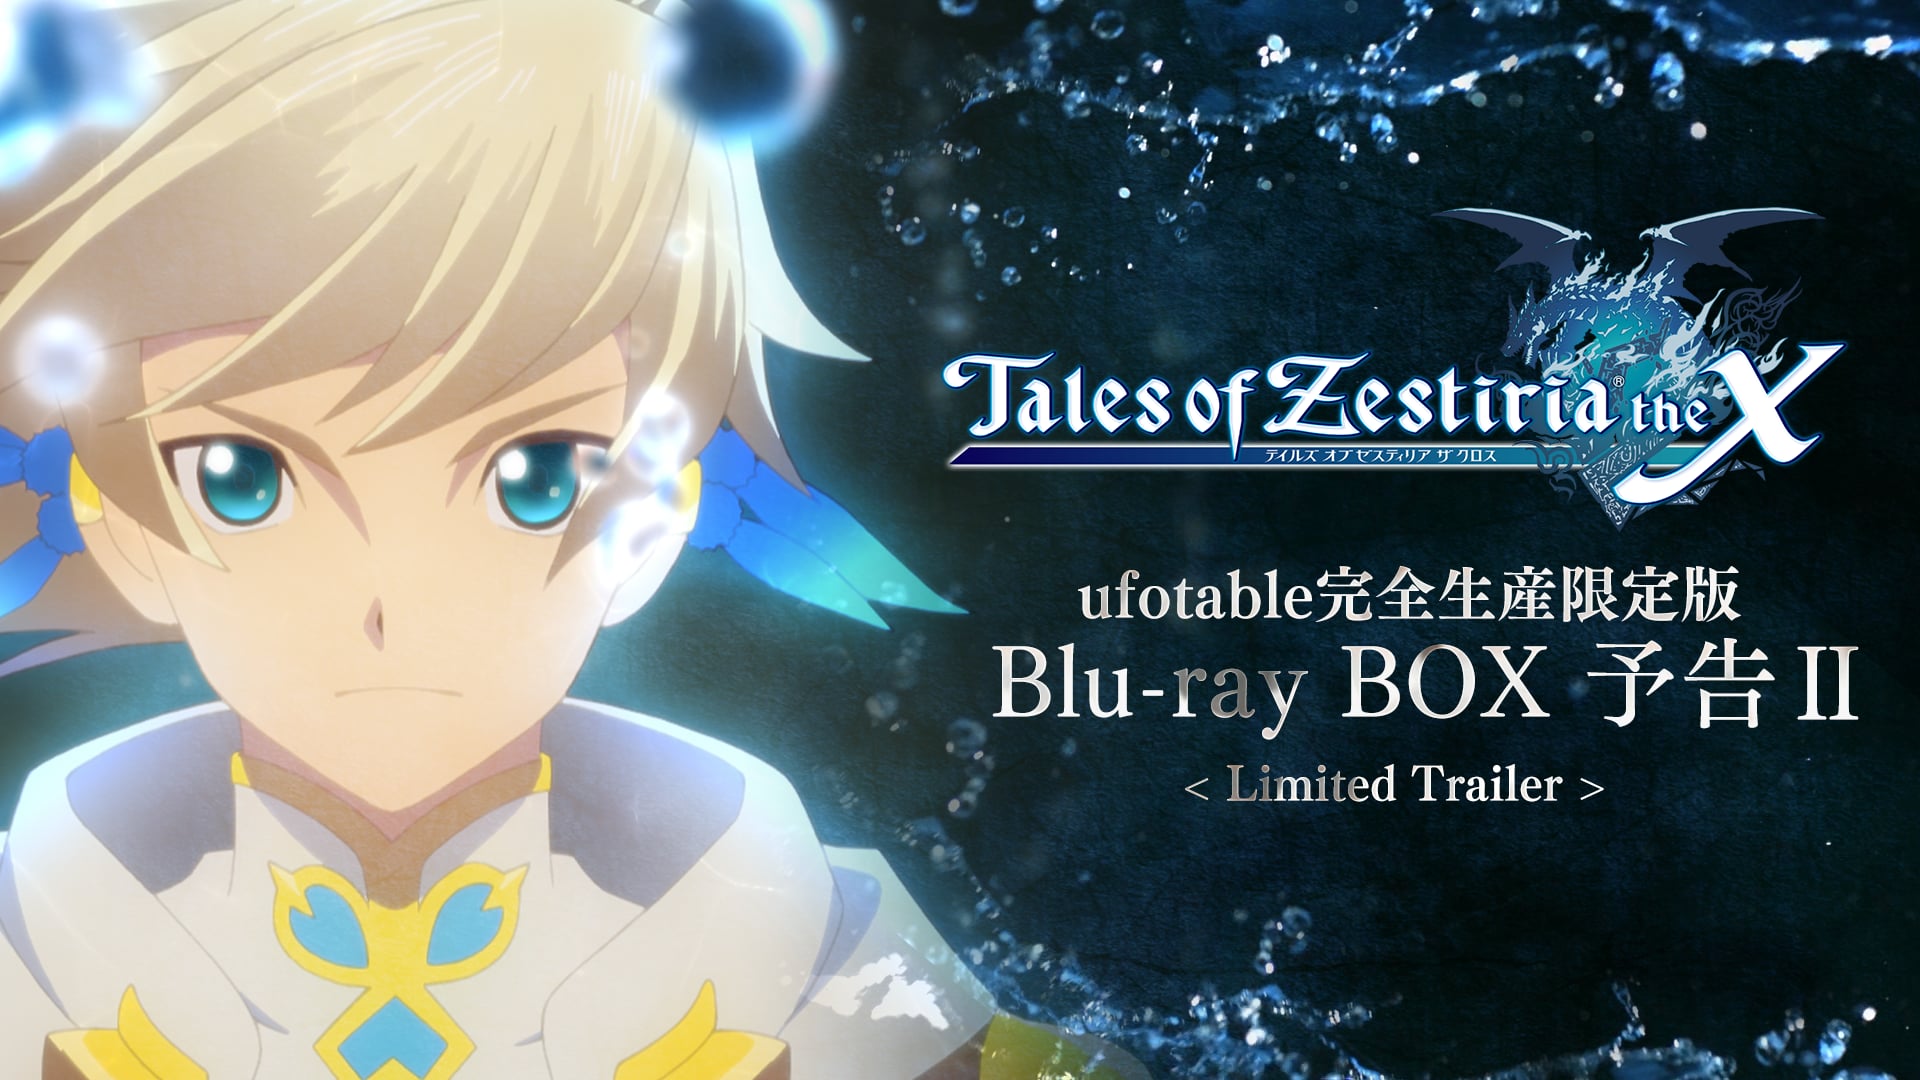 Tales of Zestiria the X ―BD BOX ufotable limited trailer Ⅱ